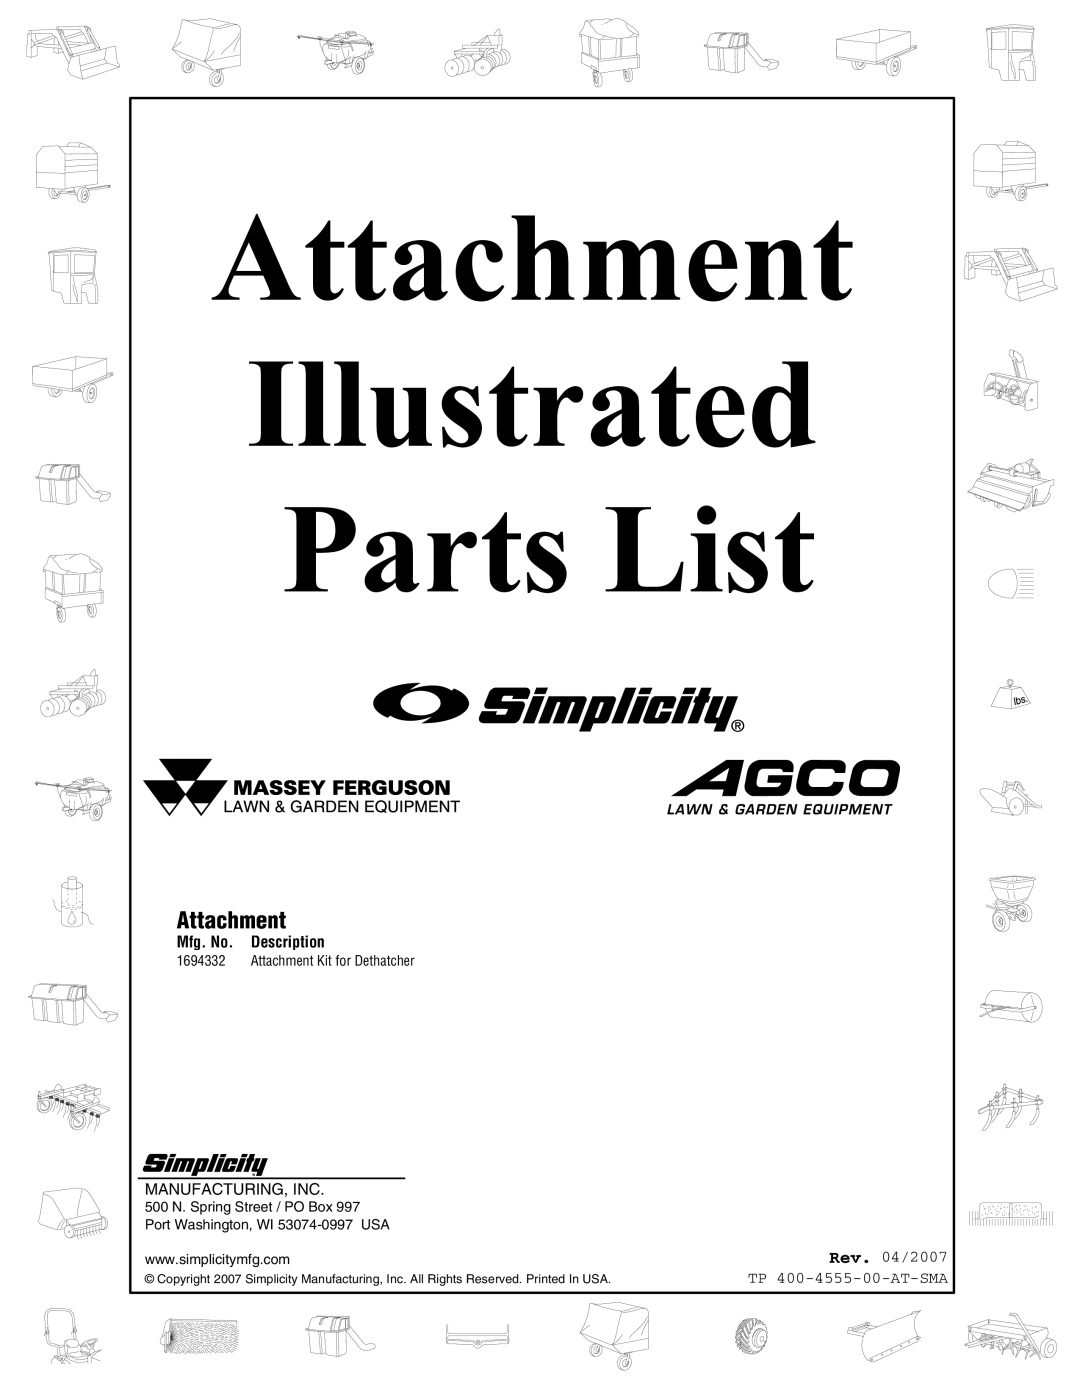 Simplicity 1694332 manual Attachment, Mfg. No. Description, Rev. 04/2007, TP 400-4555-00-AT-SMA, Illustrated, Parts List 